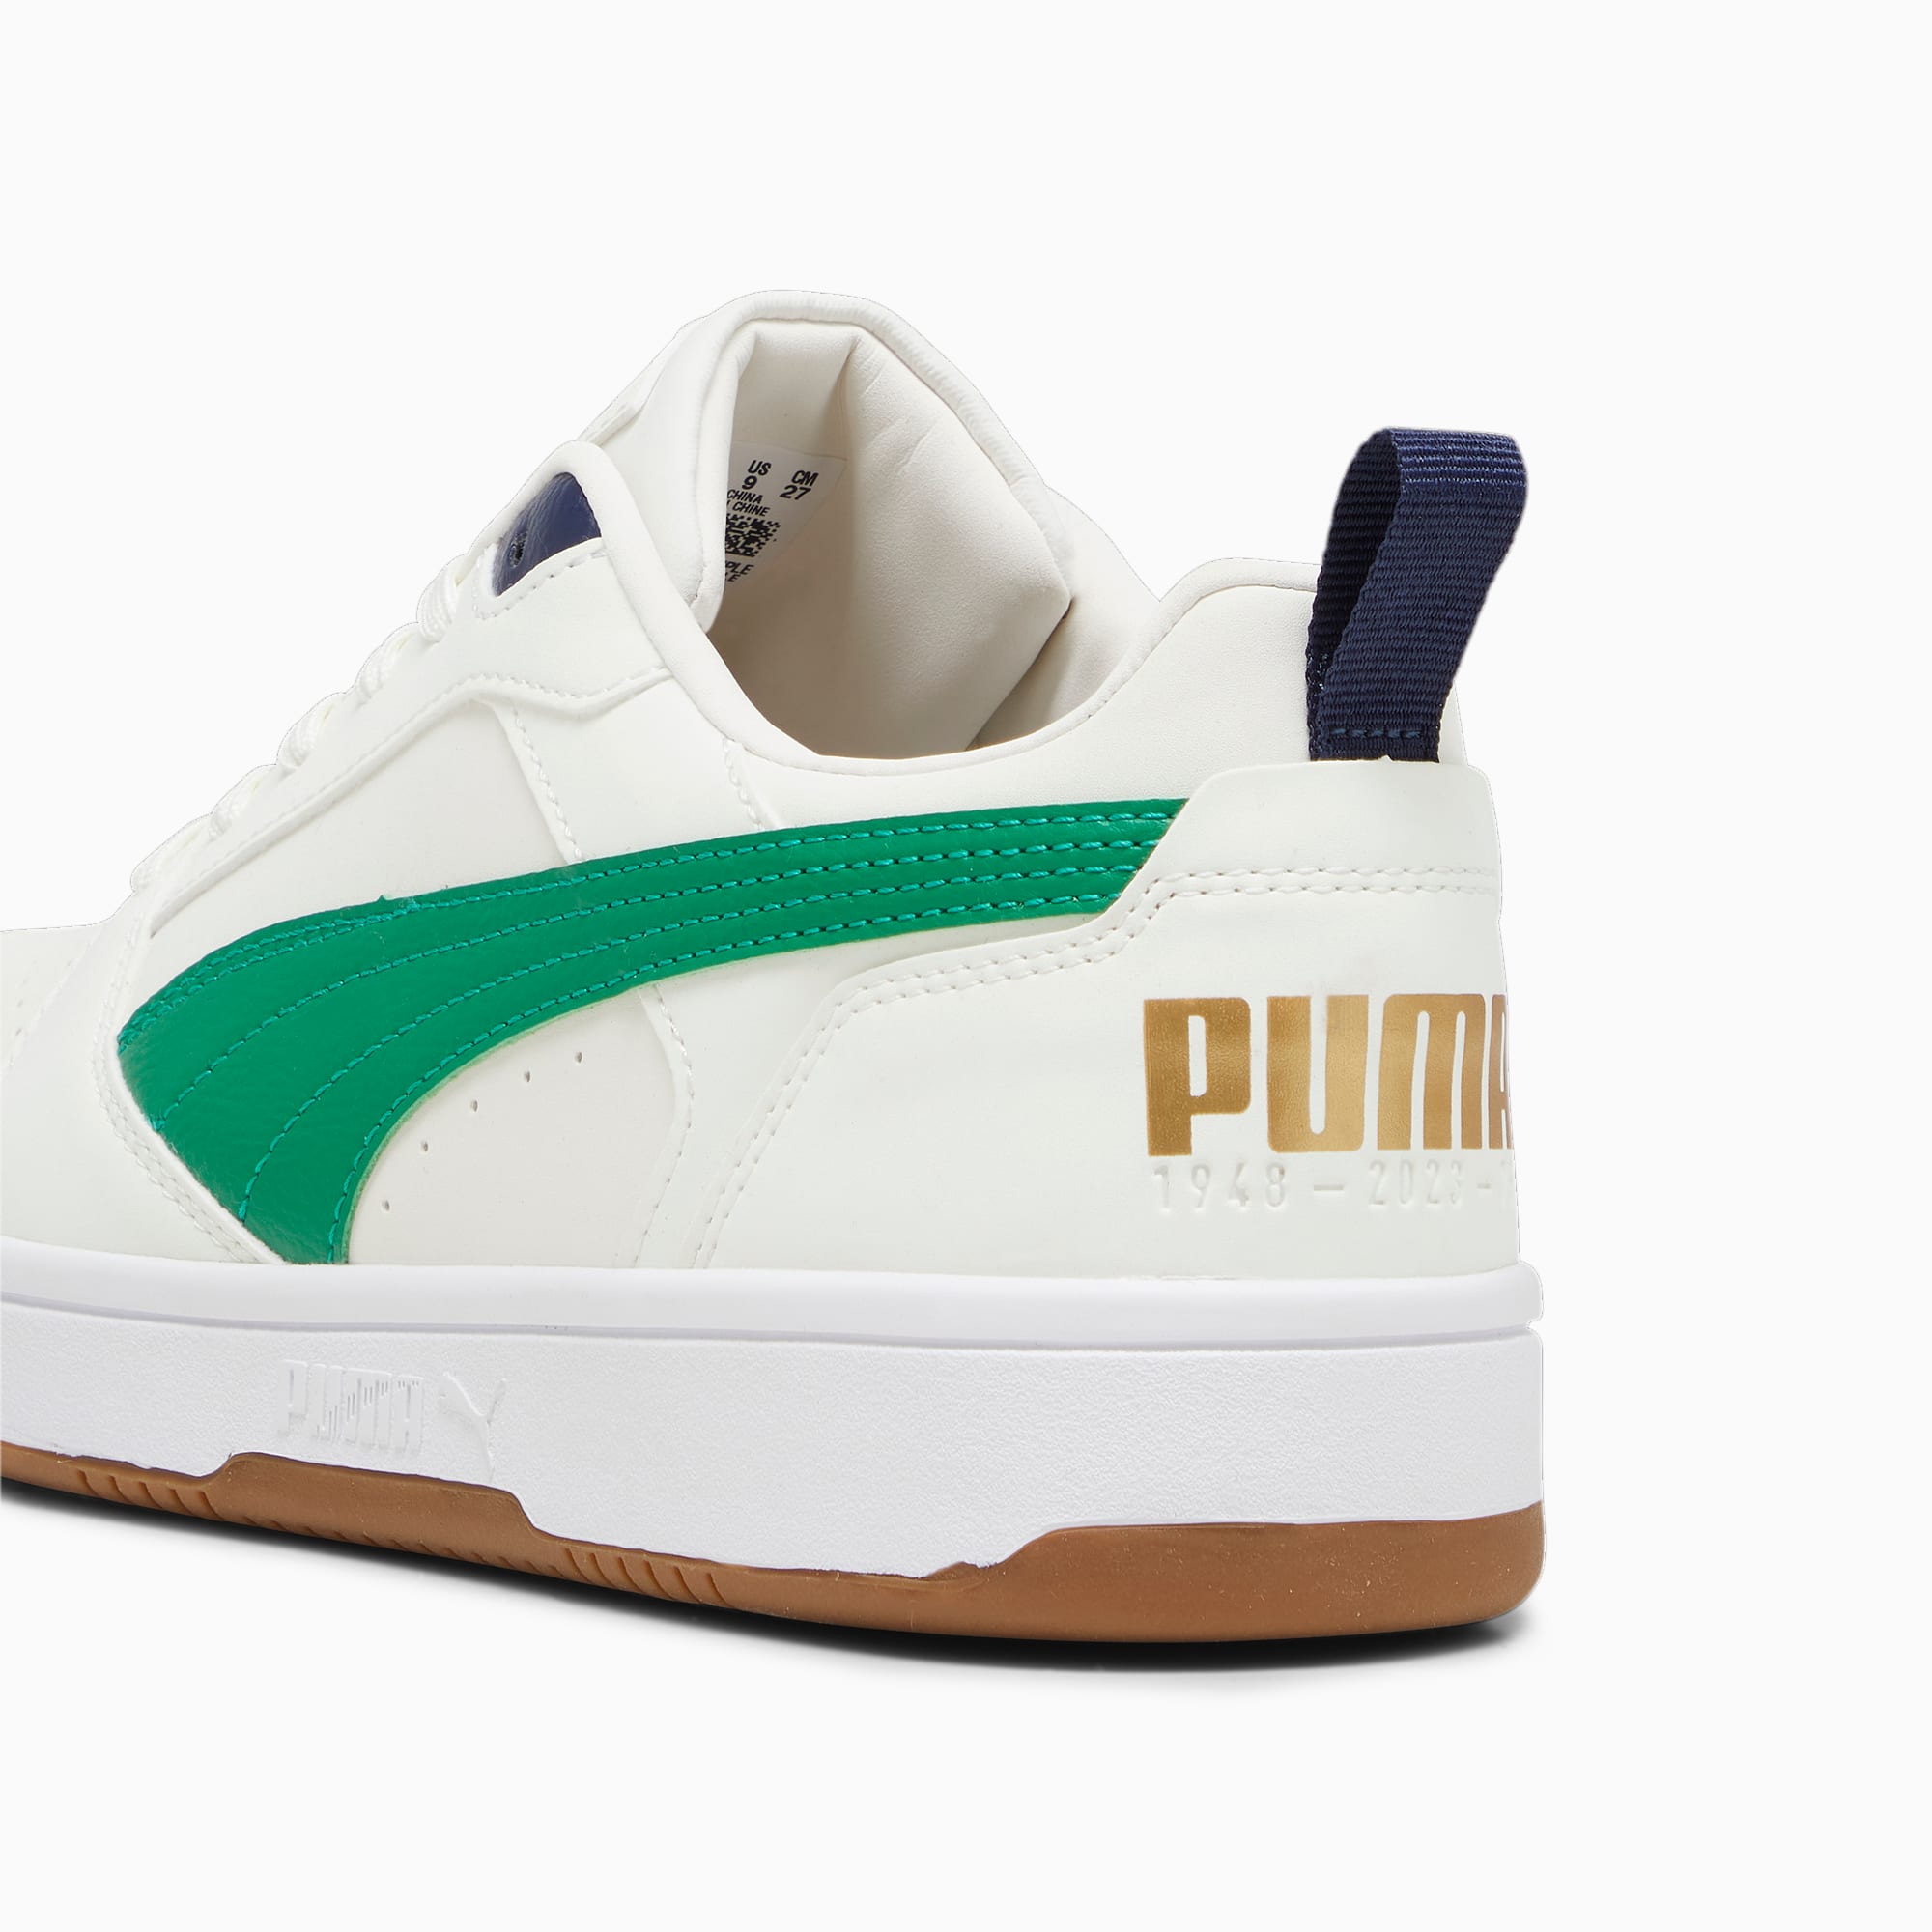 PUMA Chaussure Sneakers Basses Du 75e Anniversaire Rebound, Blanc/Bleu/Vert